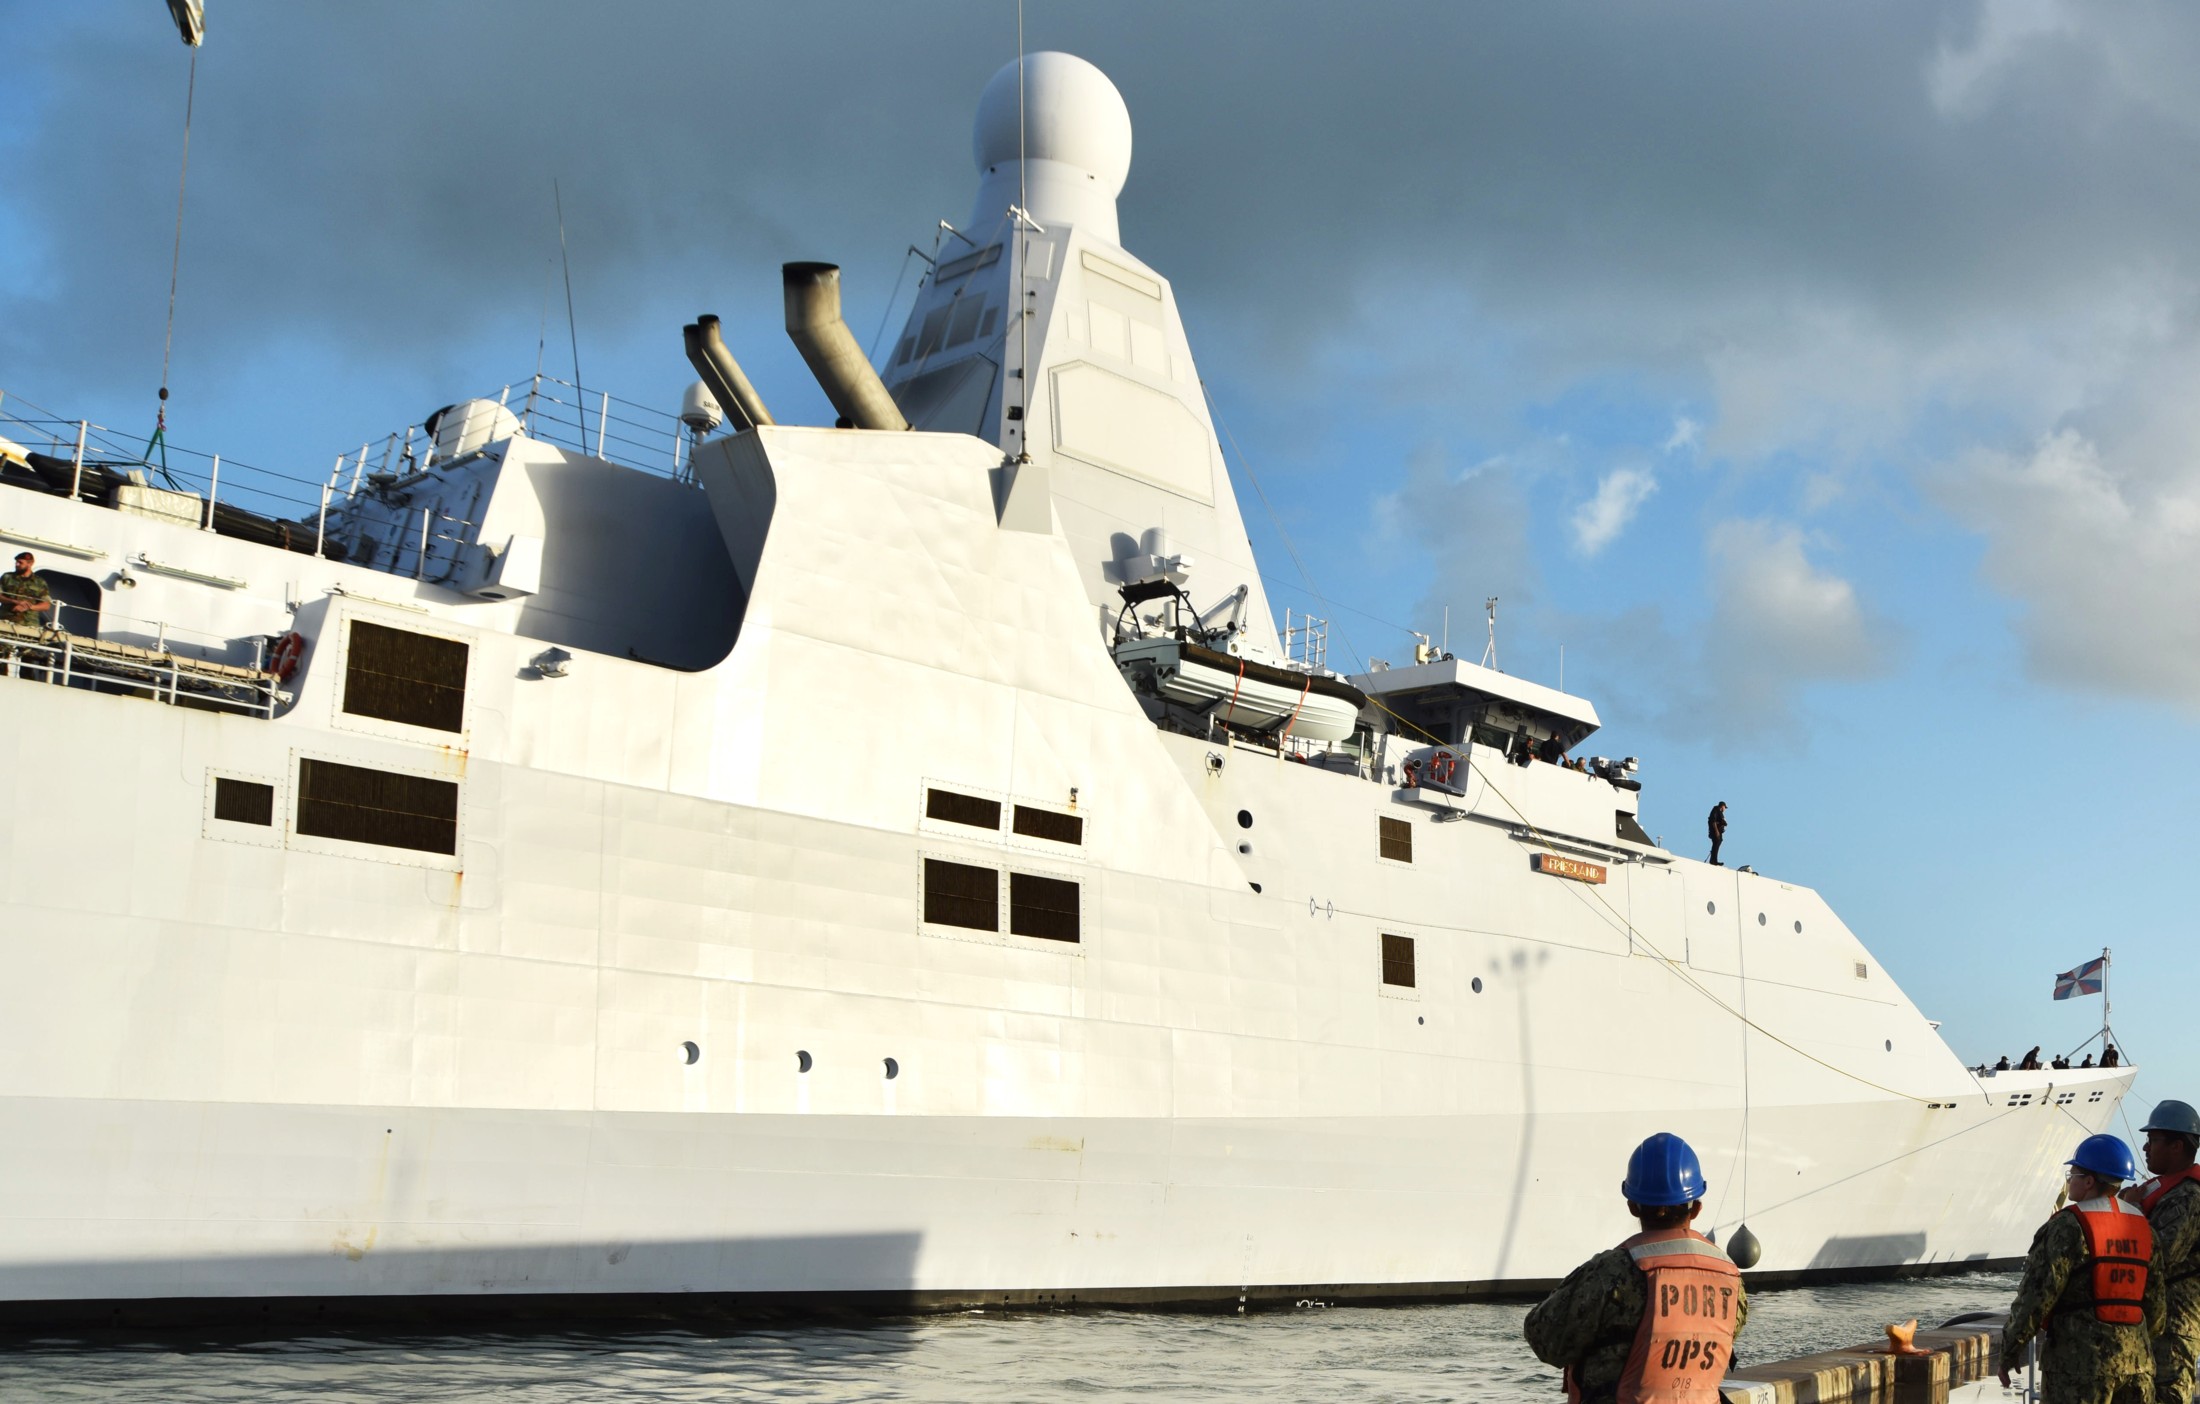 p-842 hnlms friesland holland class offshore patrol vessel opv royal netherlands navy 04 zr. ms.